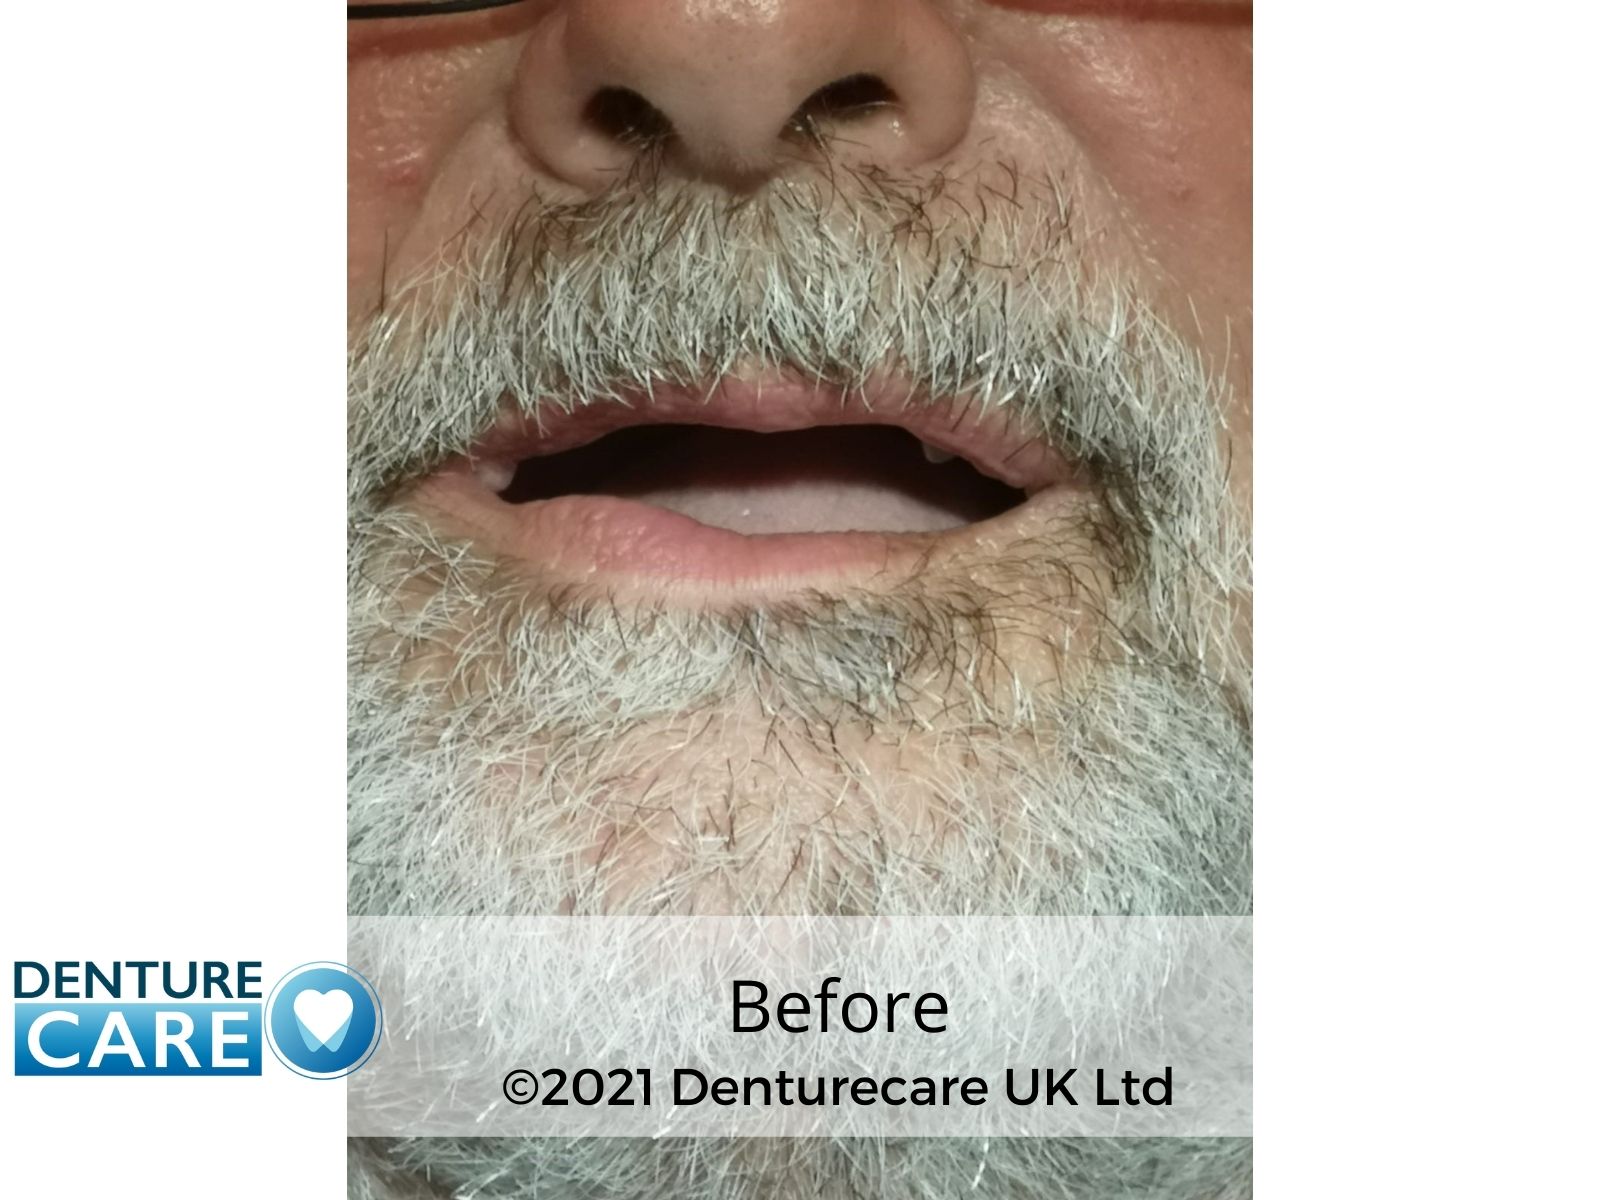 Before dentures